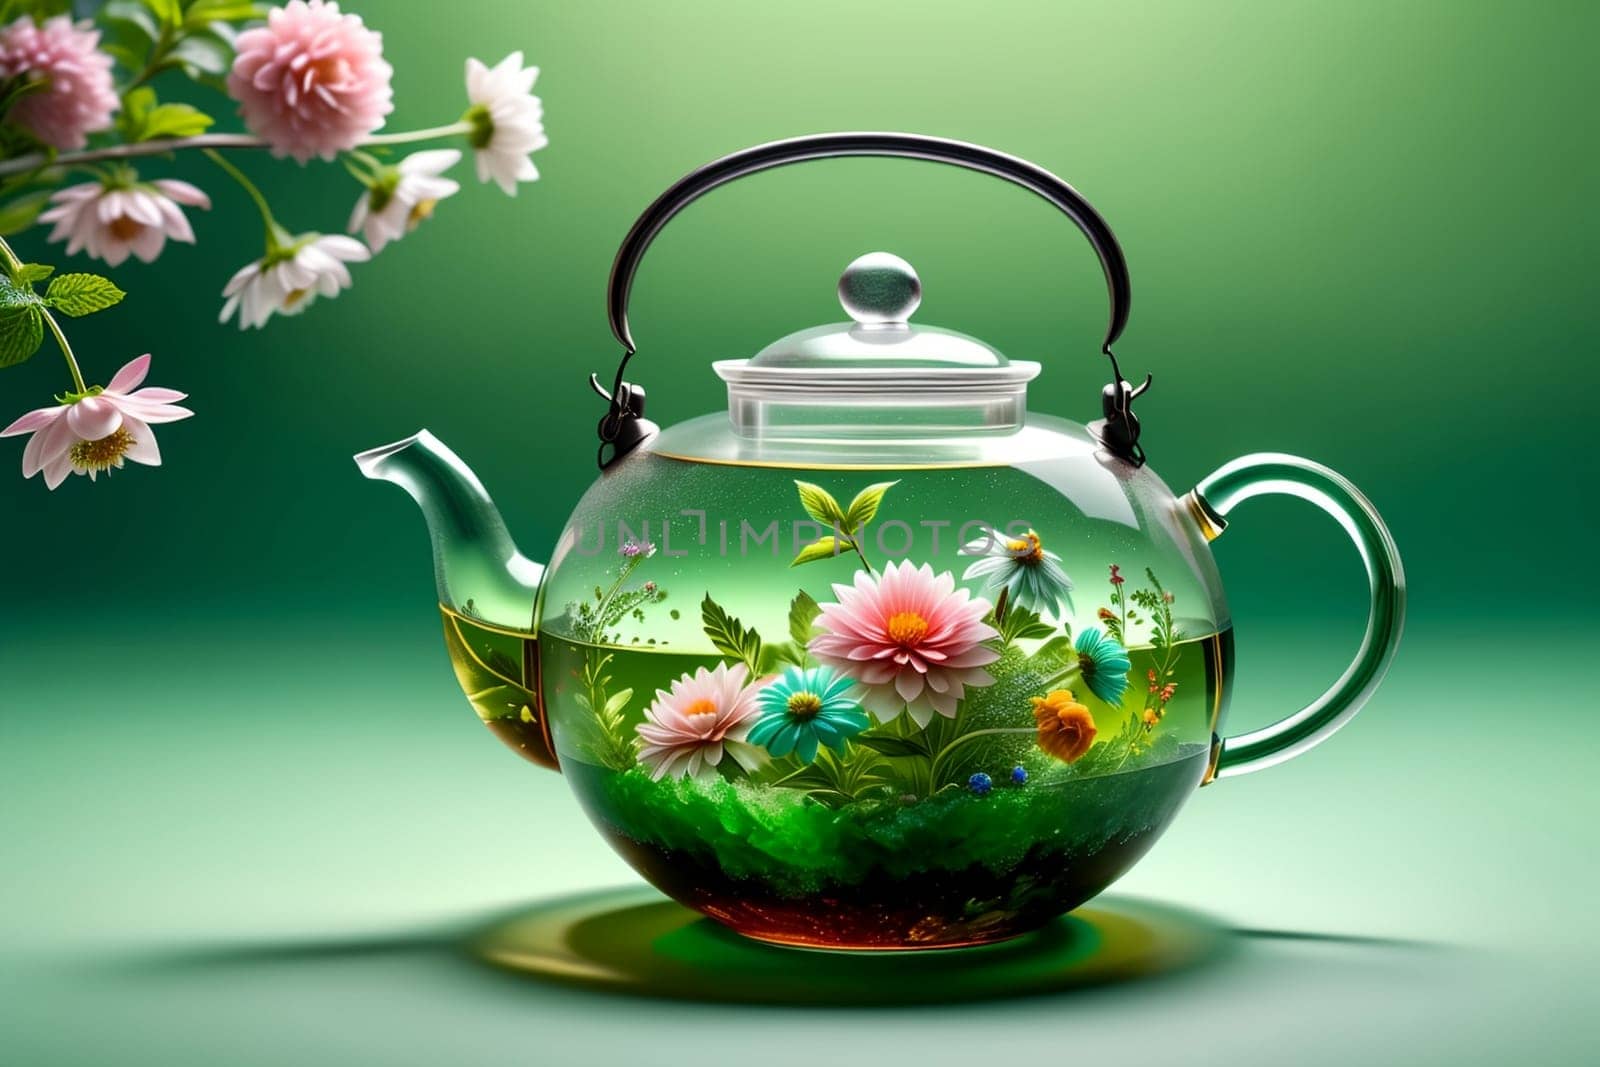 flower tea in a glass teapot on a green background by Rawlik